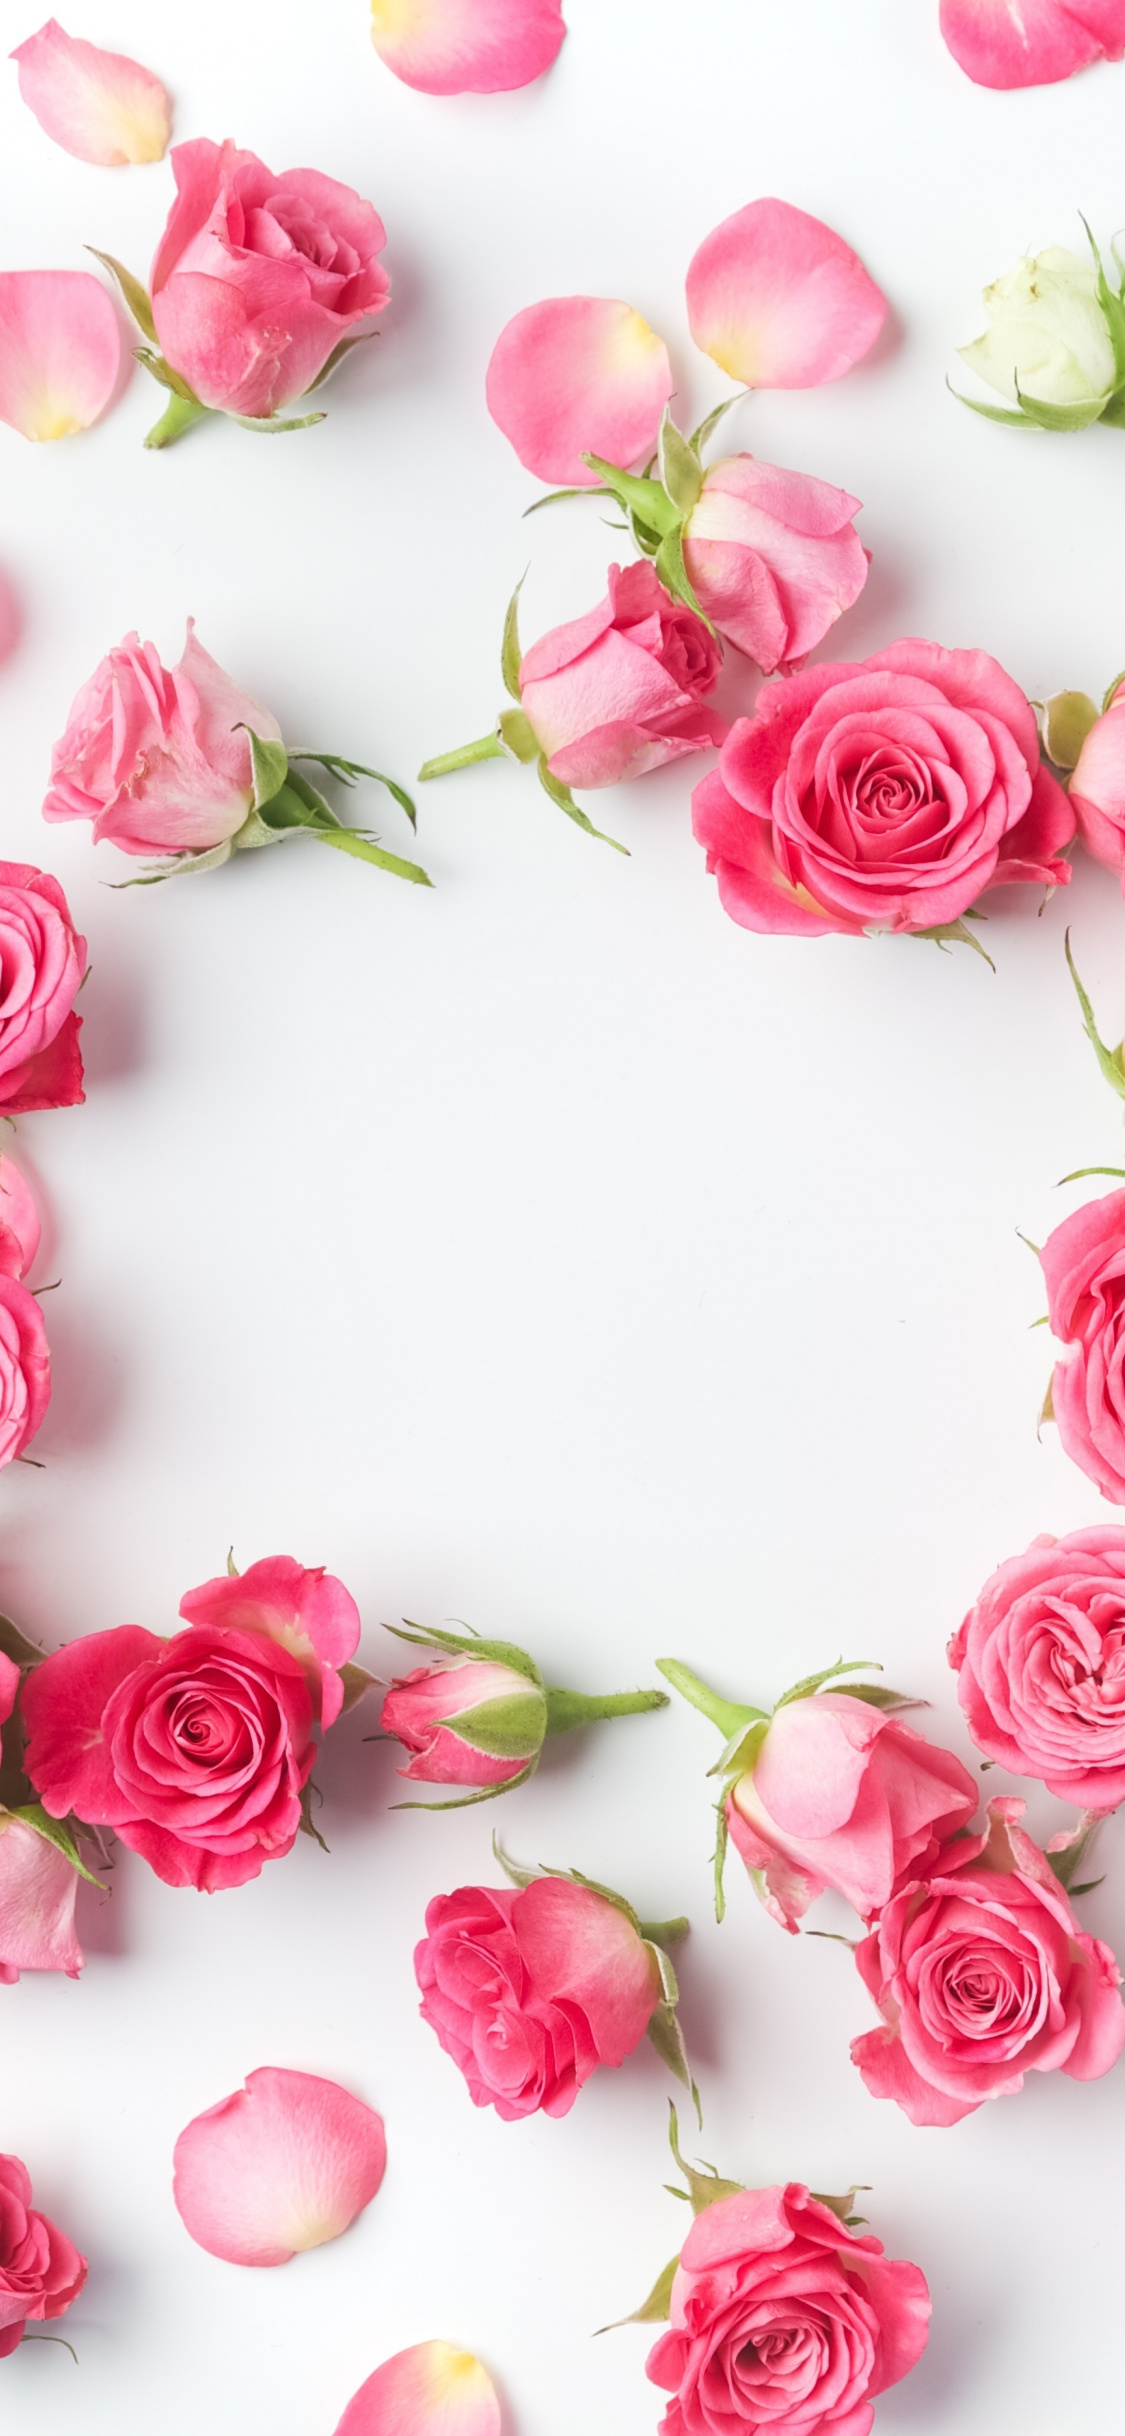 flower wallpaper iphone,pink,rose,petal,flower,garden roses